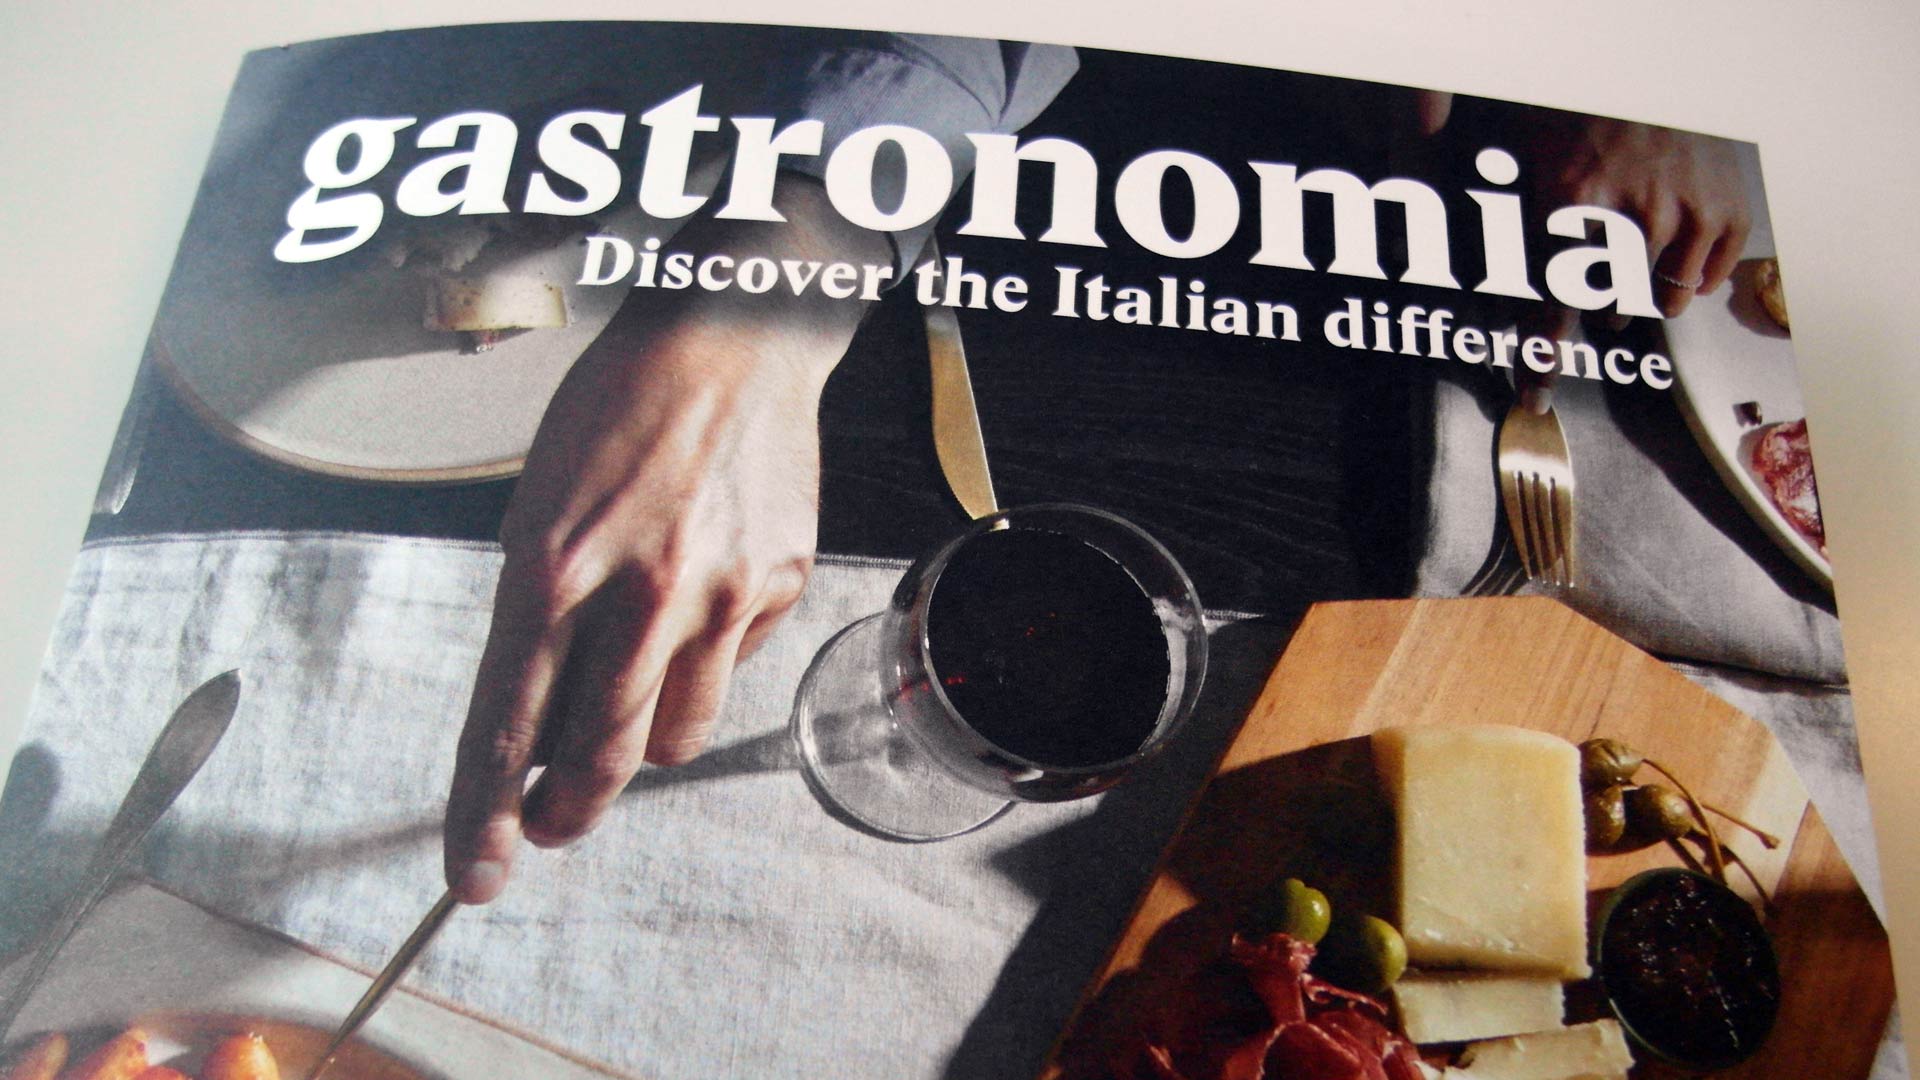 Celebrating Italian cuisine and wine